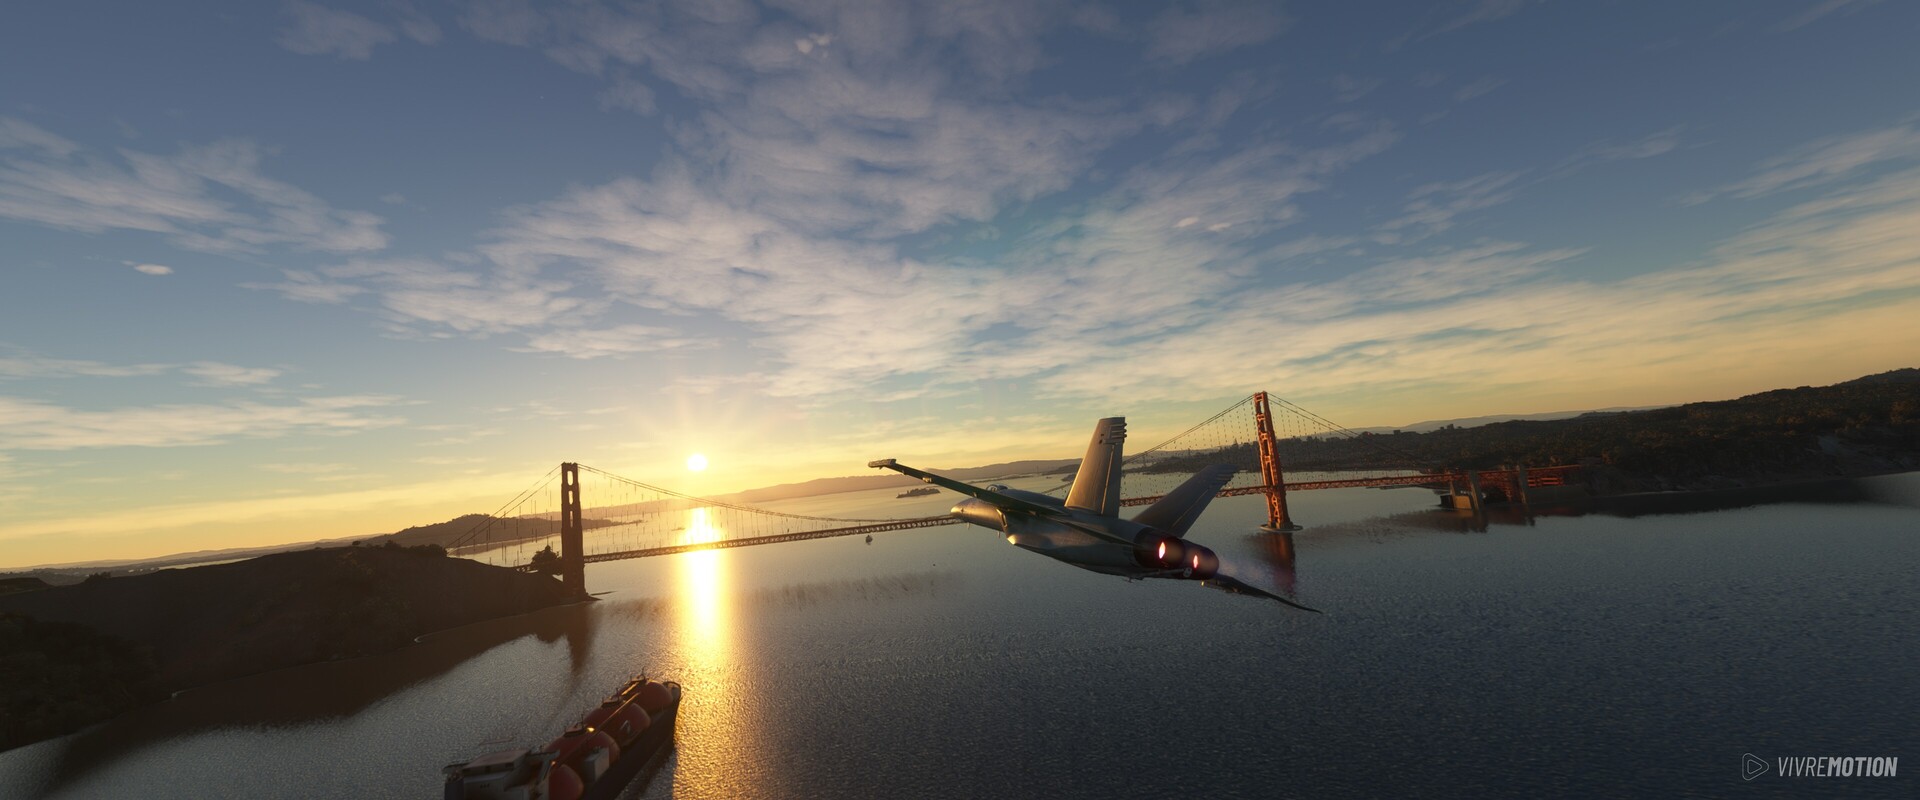 San Francisco Golden Gate Bridge - Boeing F/A-18 Super Hornet - Microsoft Flight Simulator - VIVRE-MOTION